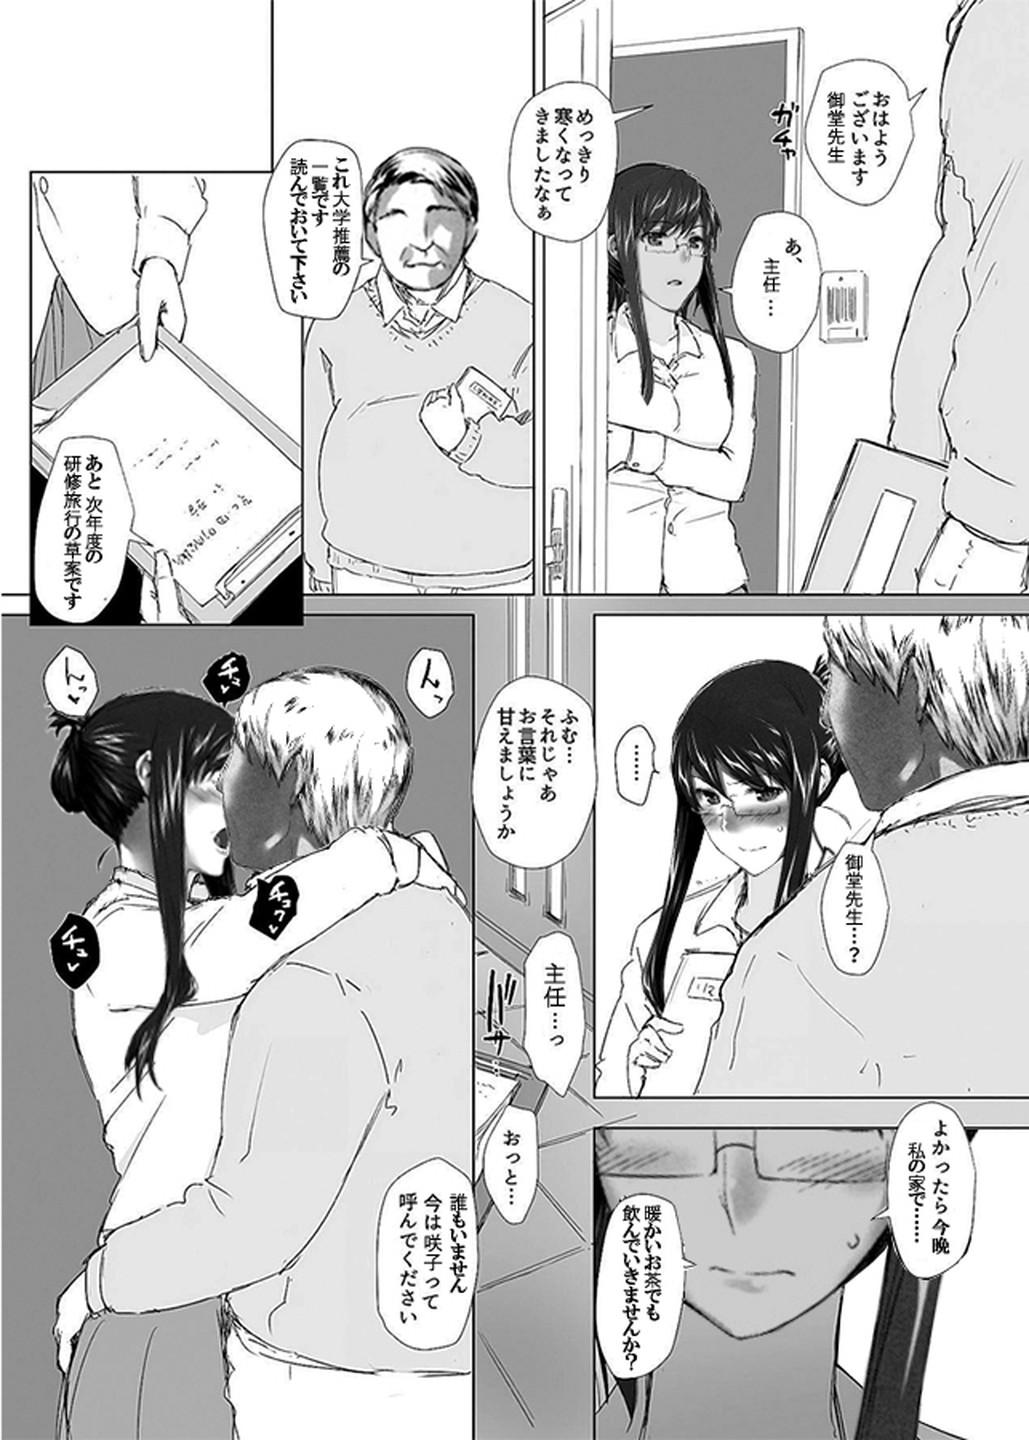 Sakiko-san in delusion Vol.1 Ver.1.1 ~Sakiko-san's circumstance at an educational training~ Stupid Sakiko (collage) on-going 117